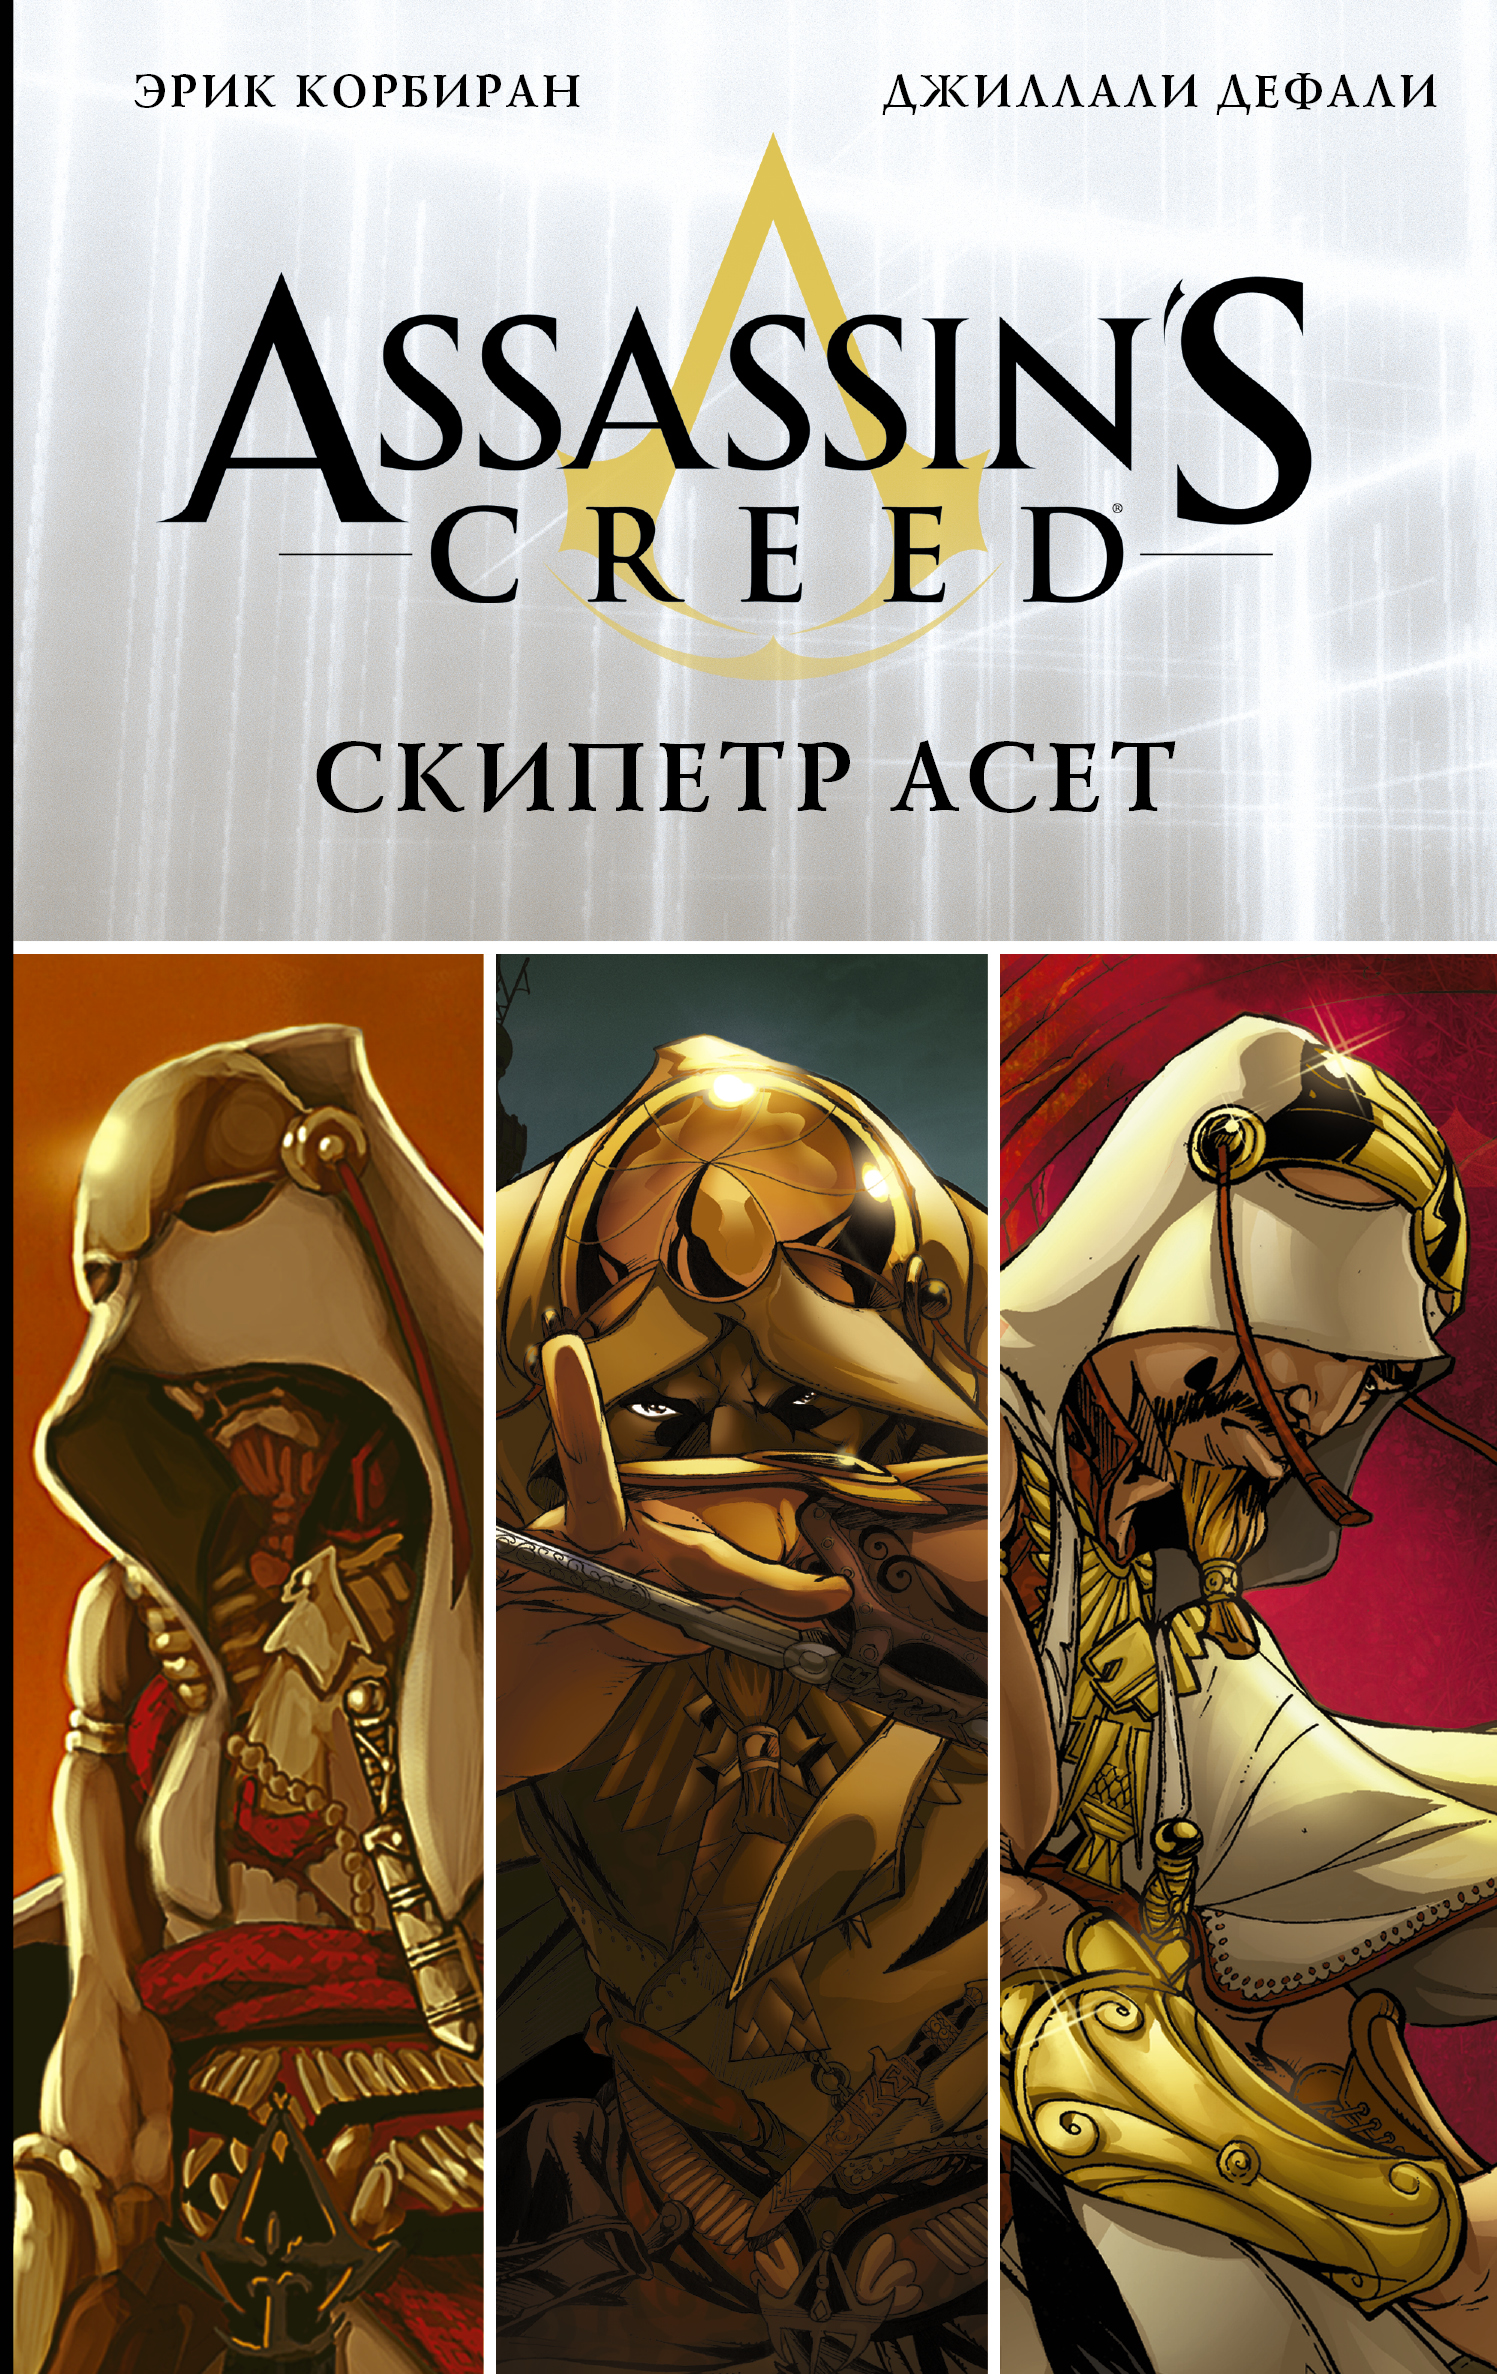 Корбиран Эрик, Дефали Джиллали Assassin's Creed: Скипетр Асет - страница 0